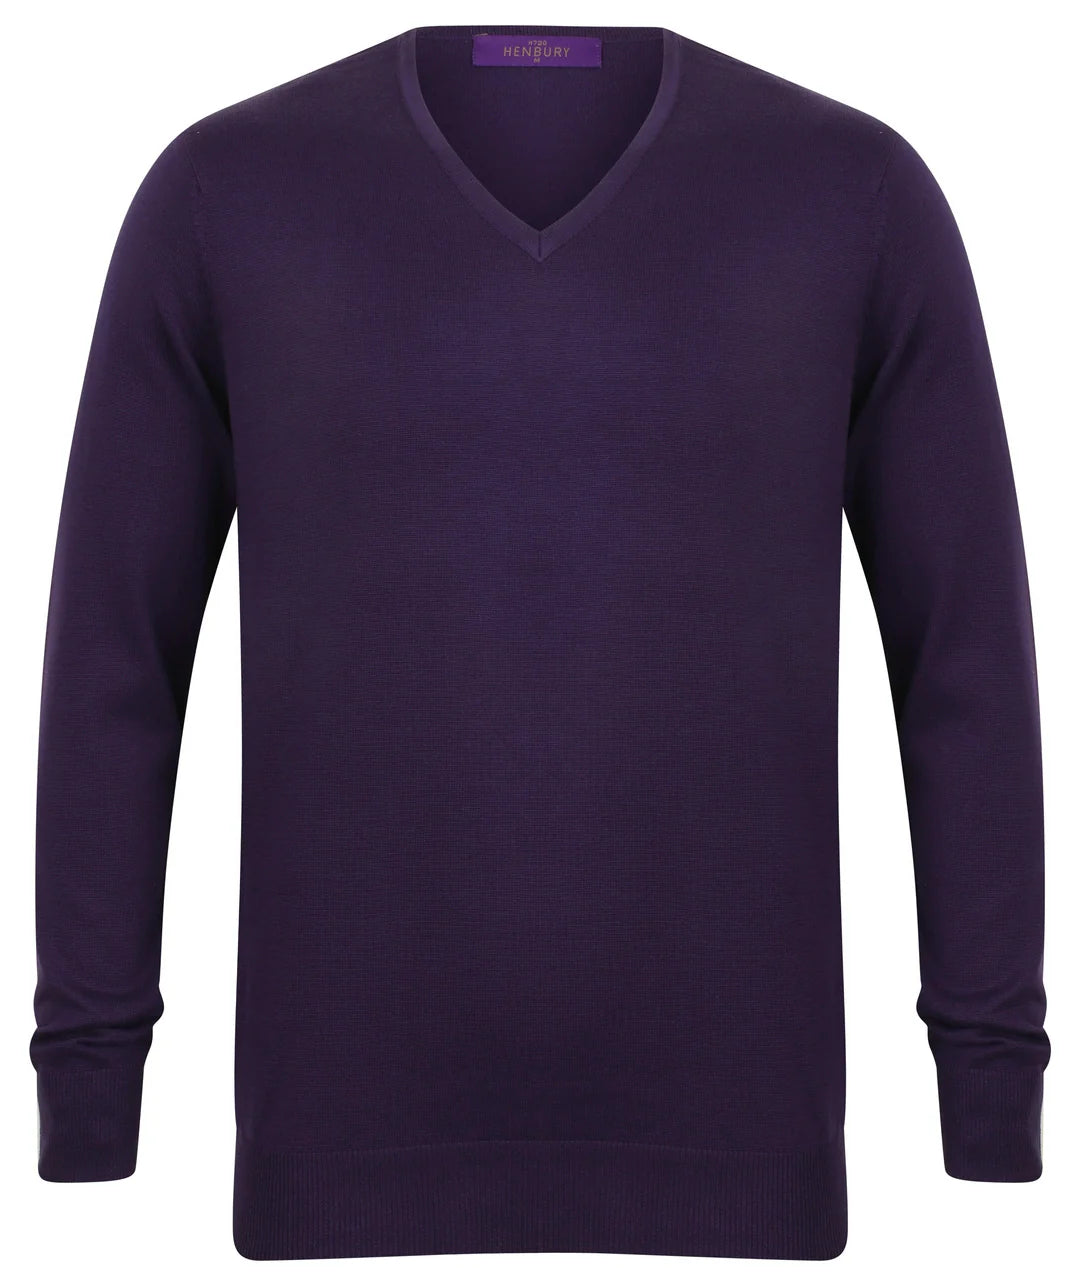 Henbury Lightweight Cotton Acrylic V Neck Sweater HB720 - COOZO